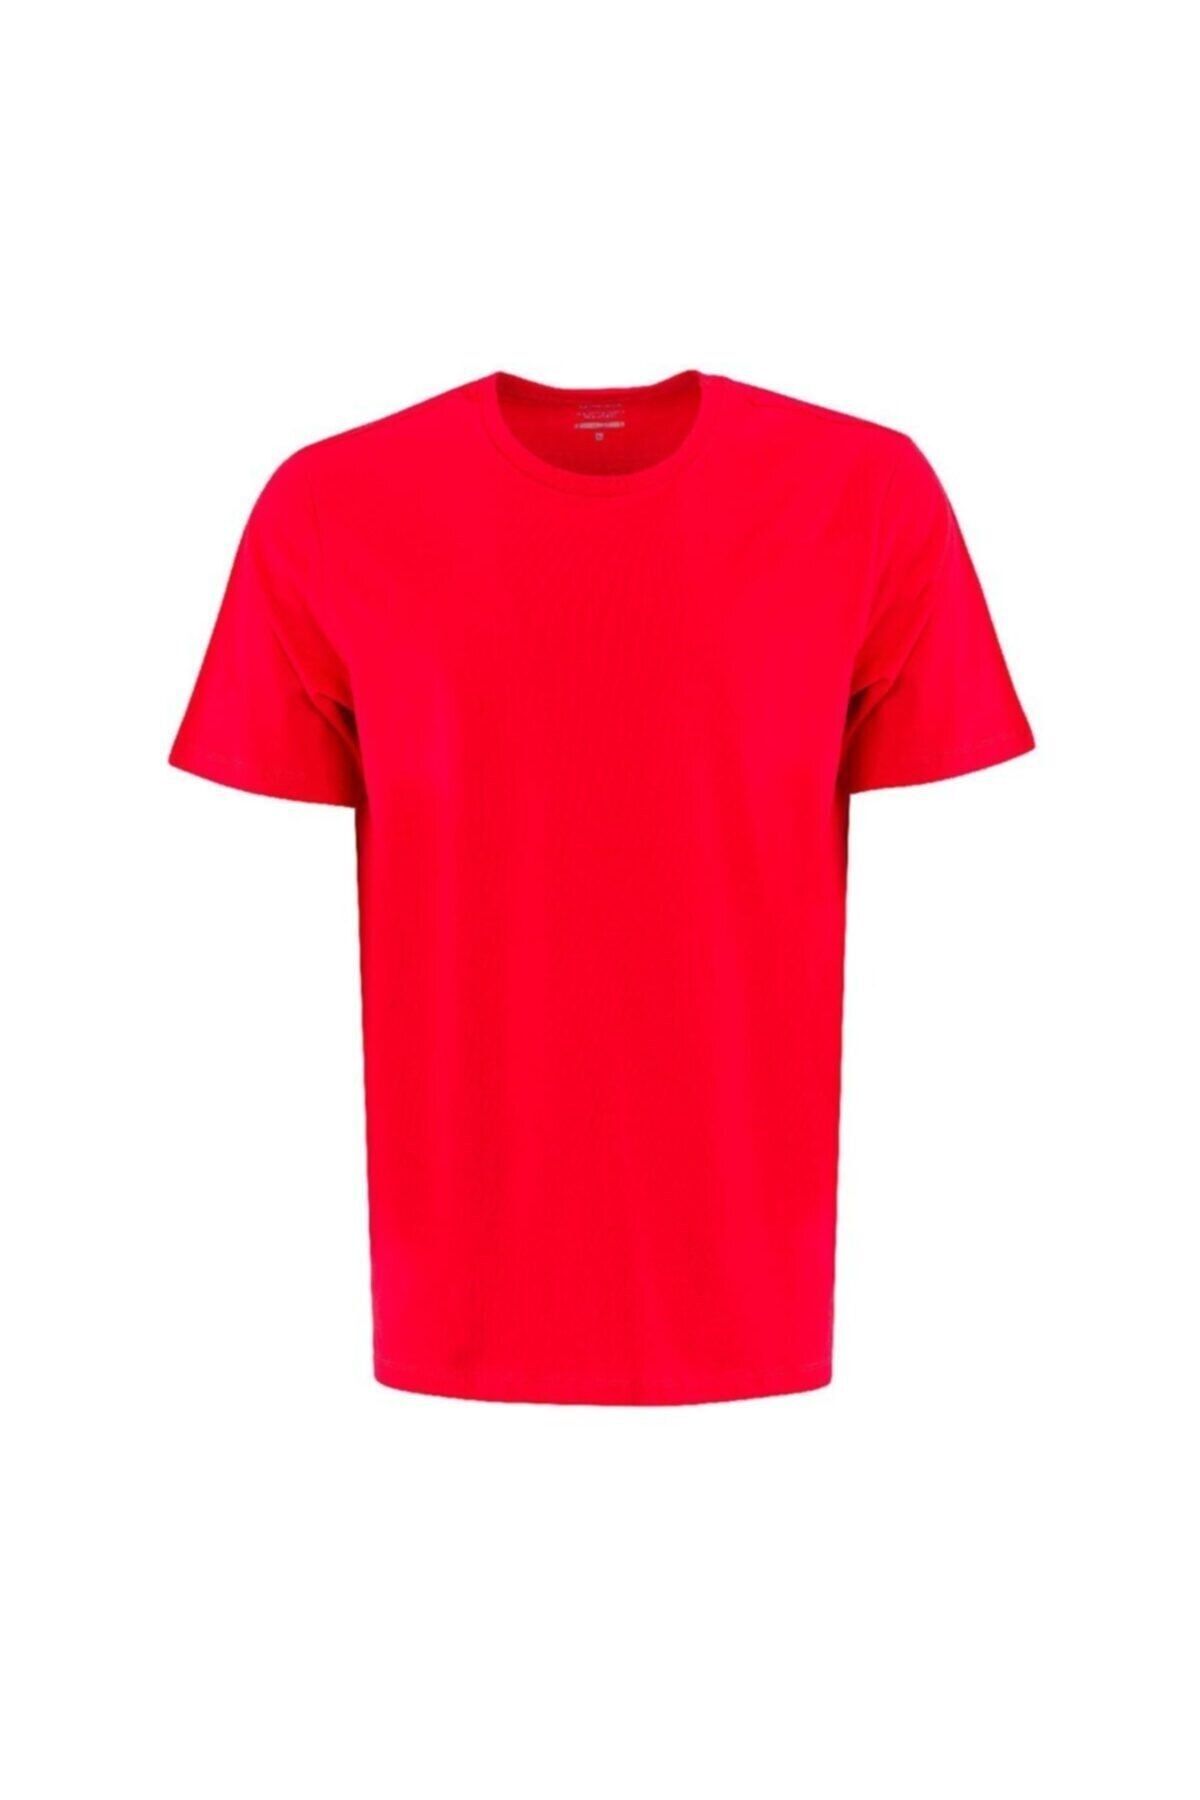 Lumberjack Düz Basic Kırmızı Erkek T-Shirt